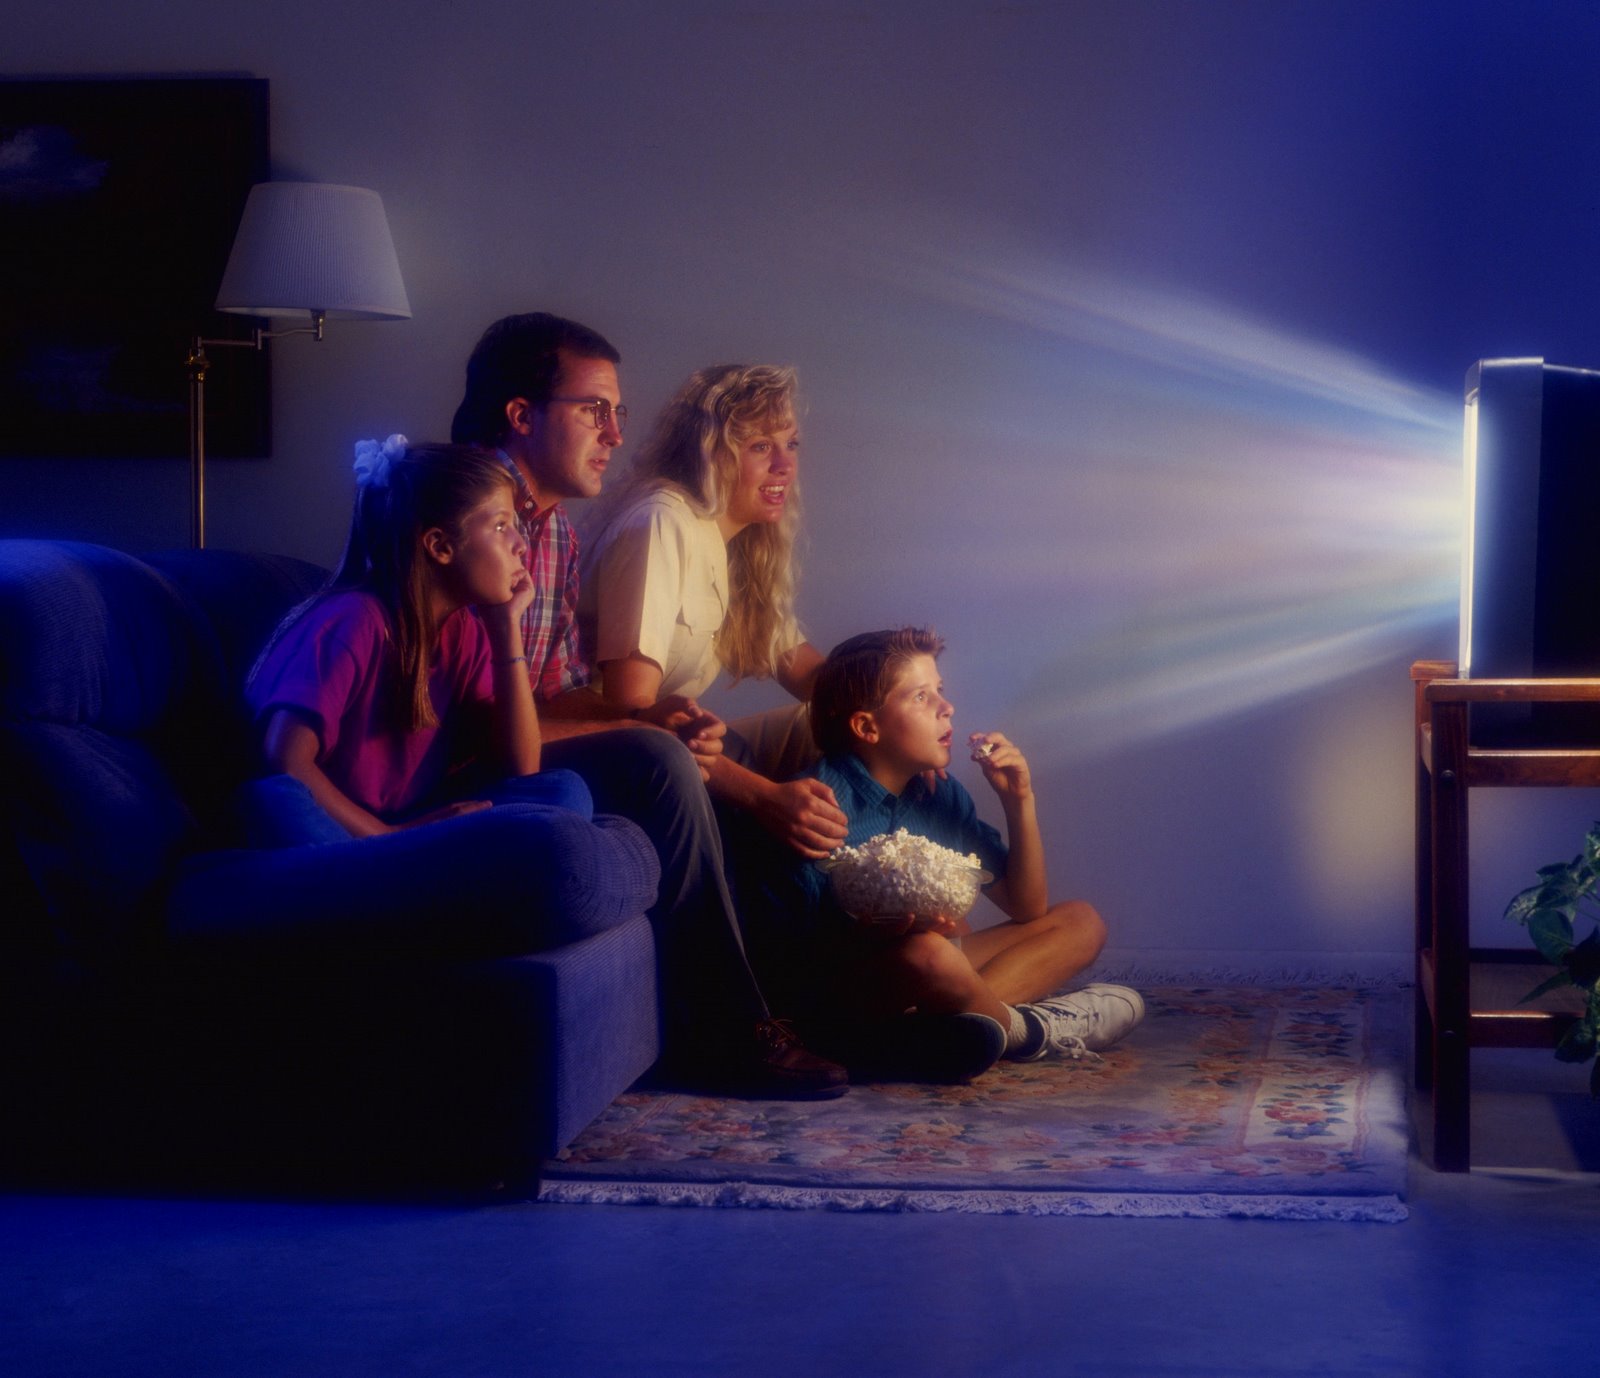 Watching their lives. Перед телевизором. Человек перед телевизором. Семья у телевизора. Человек смотрит телевизор.